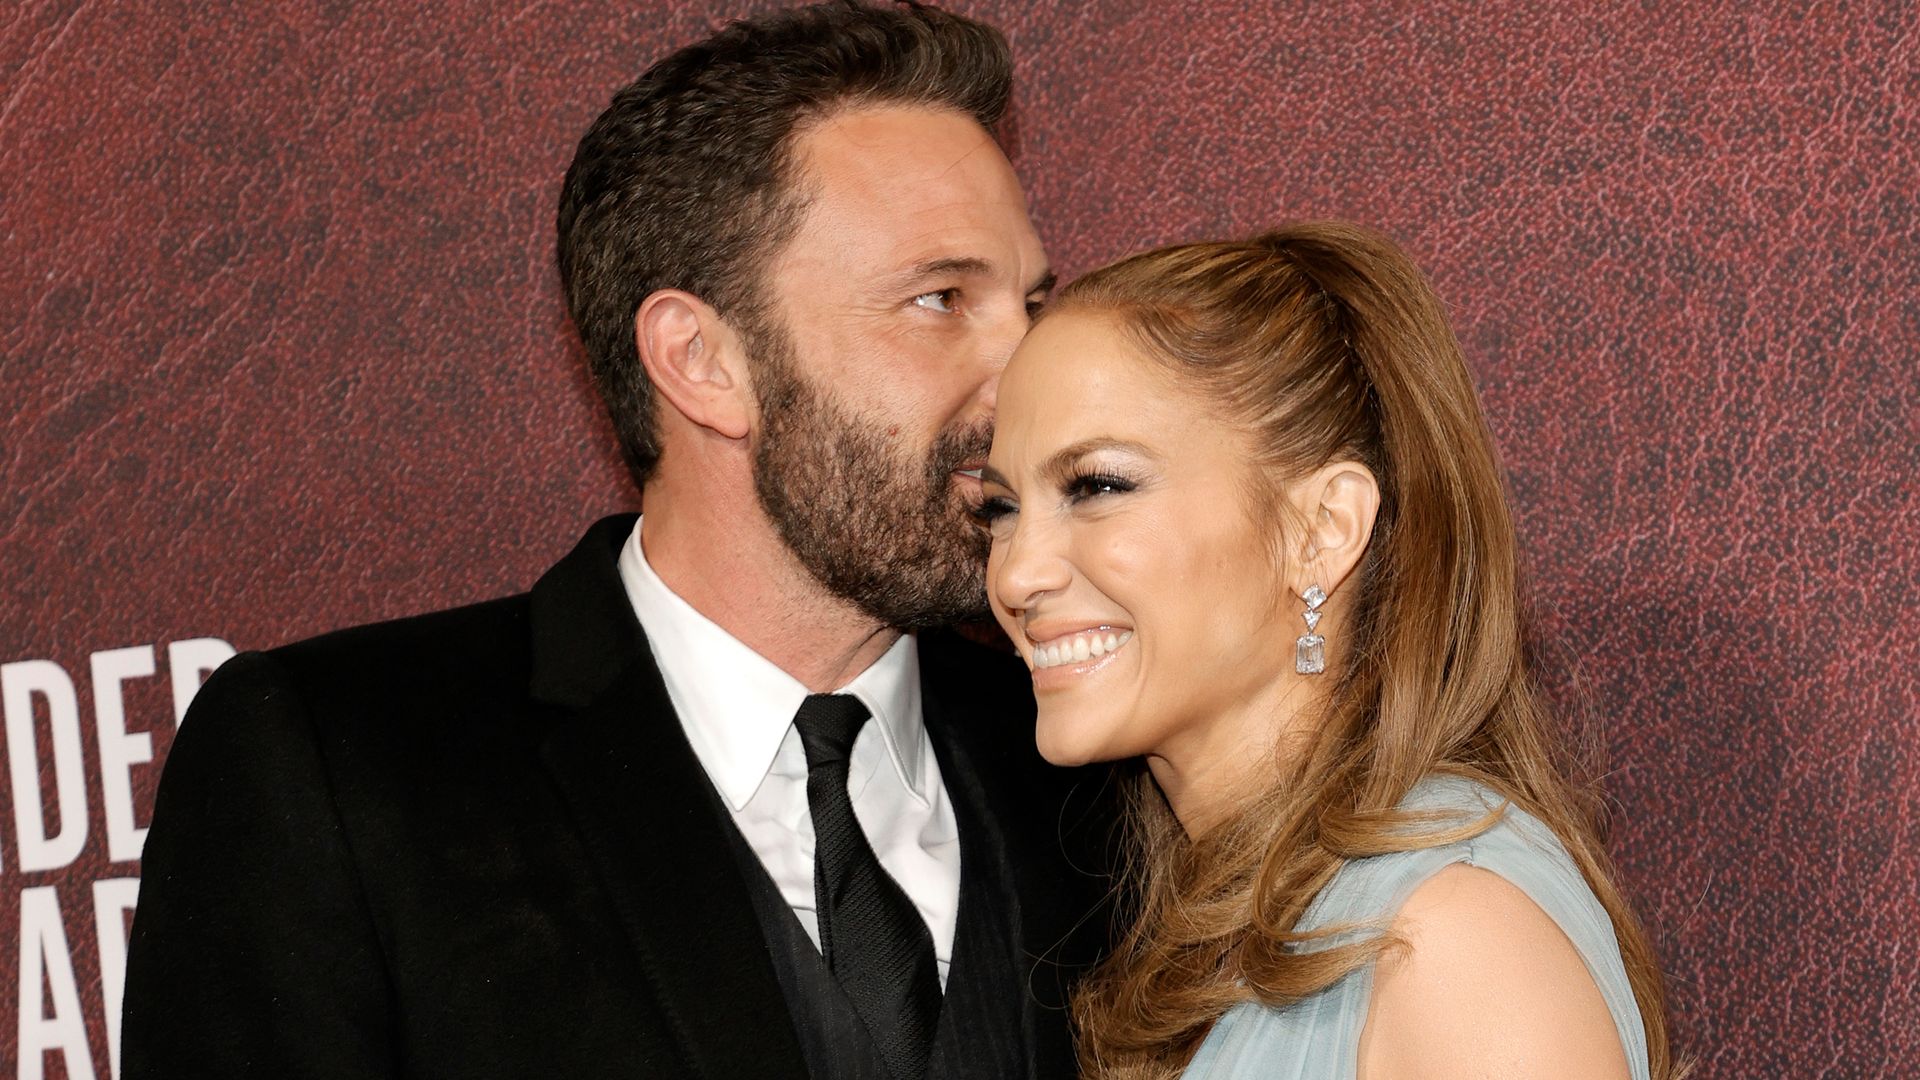 Ben Affleck kissing Jennifer Lopez on the cheek